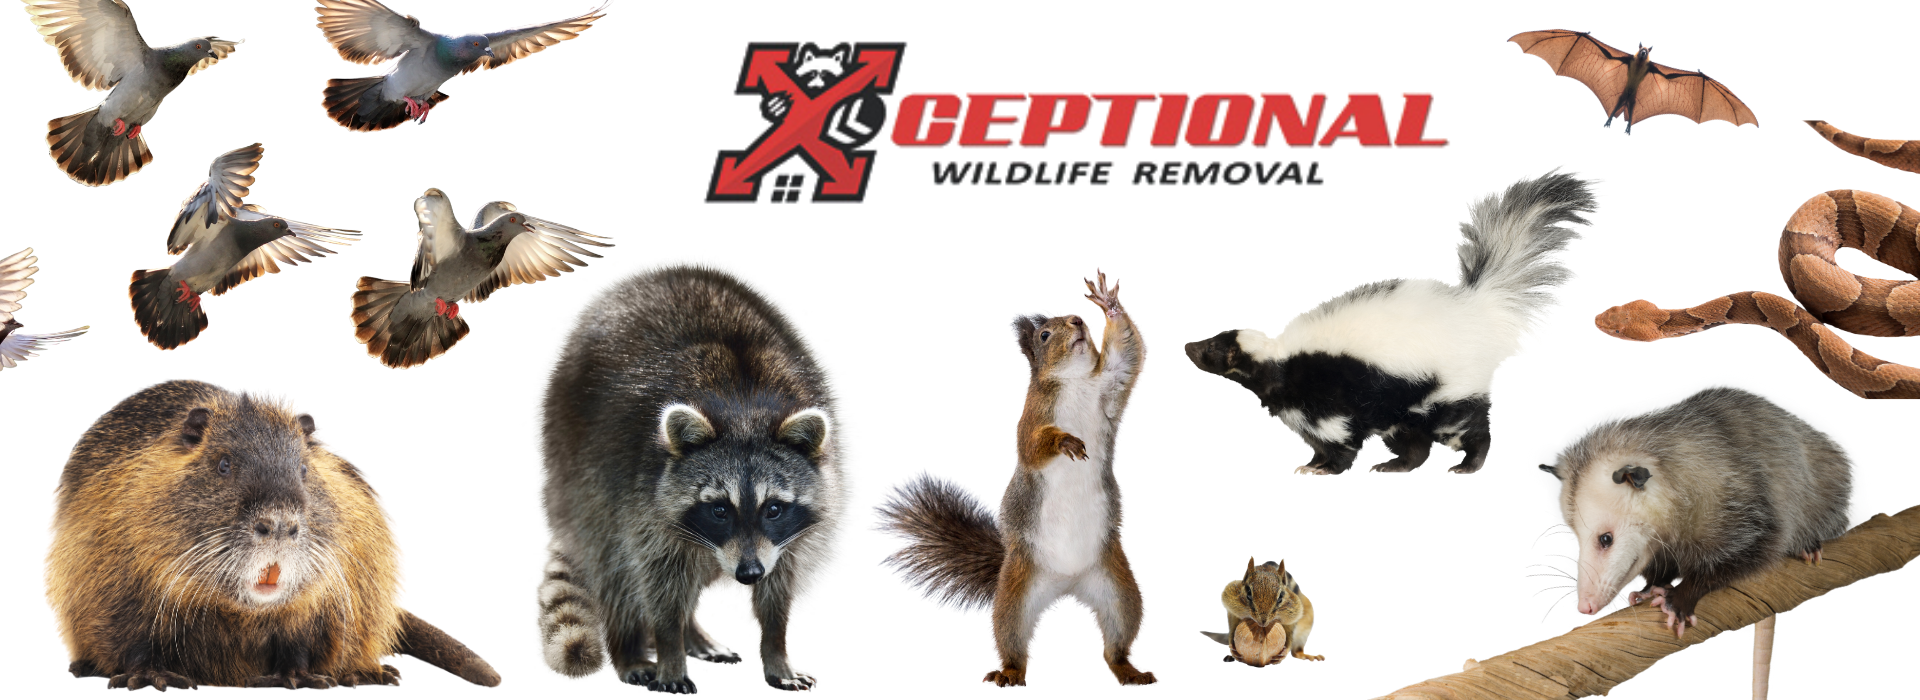 Wildlife Removal, Animal Control | Xceptional Wildlife Removal